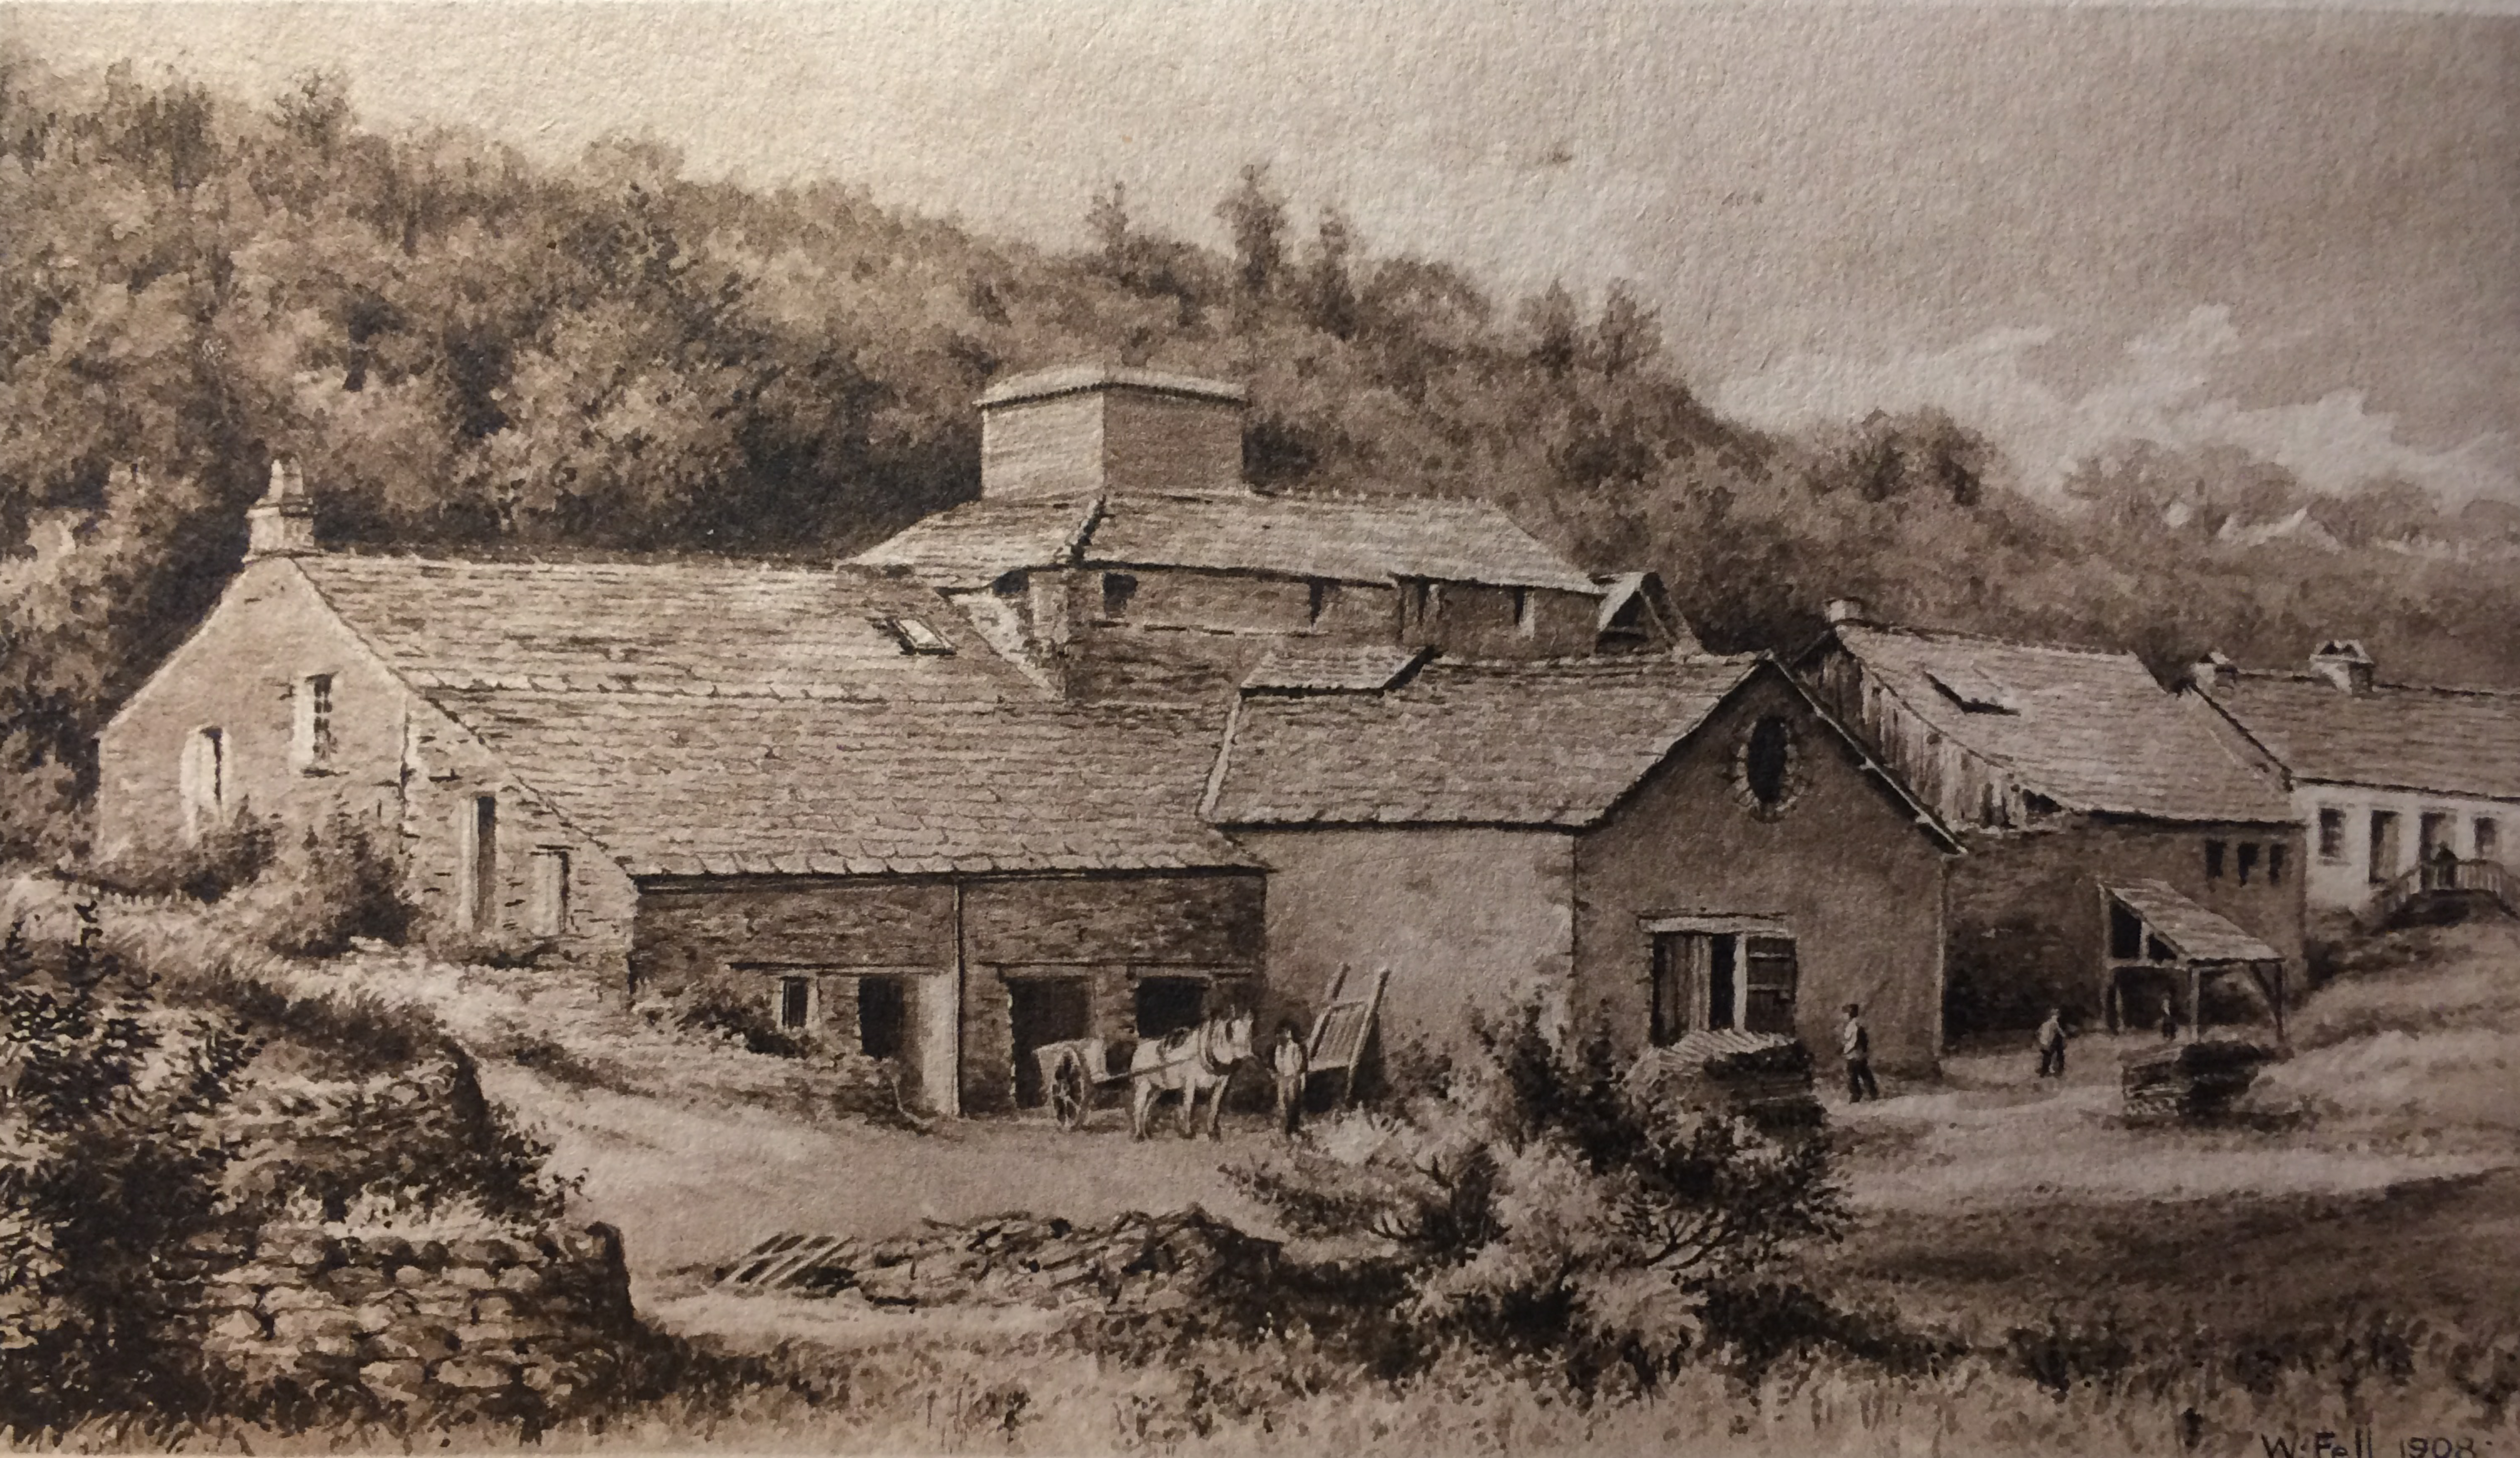 The Backbarrow Furnace circa 1850.